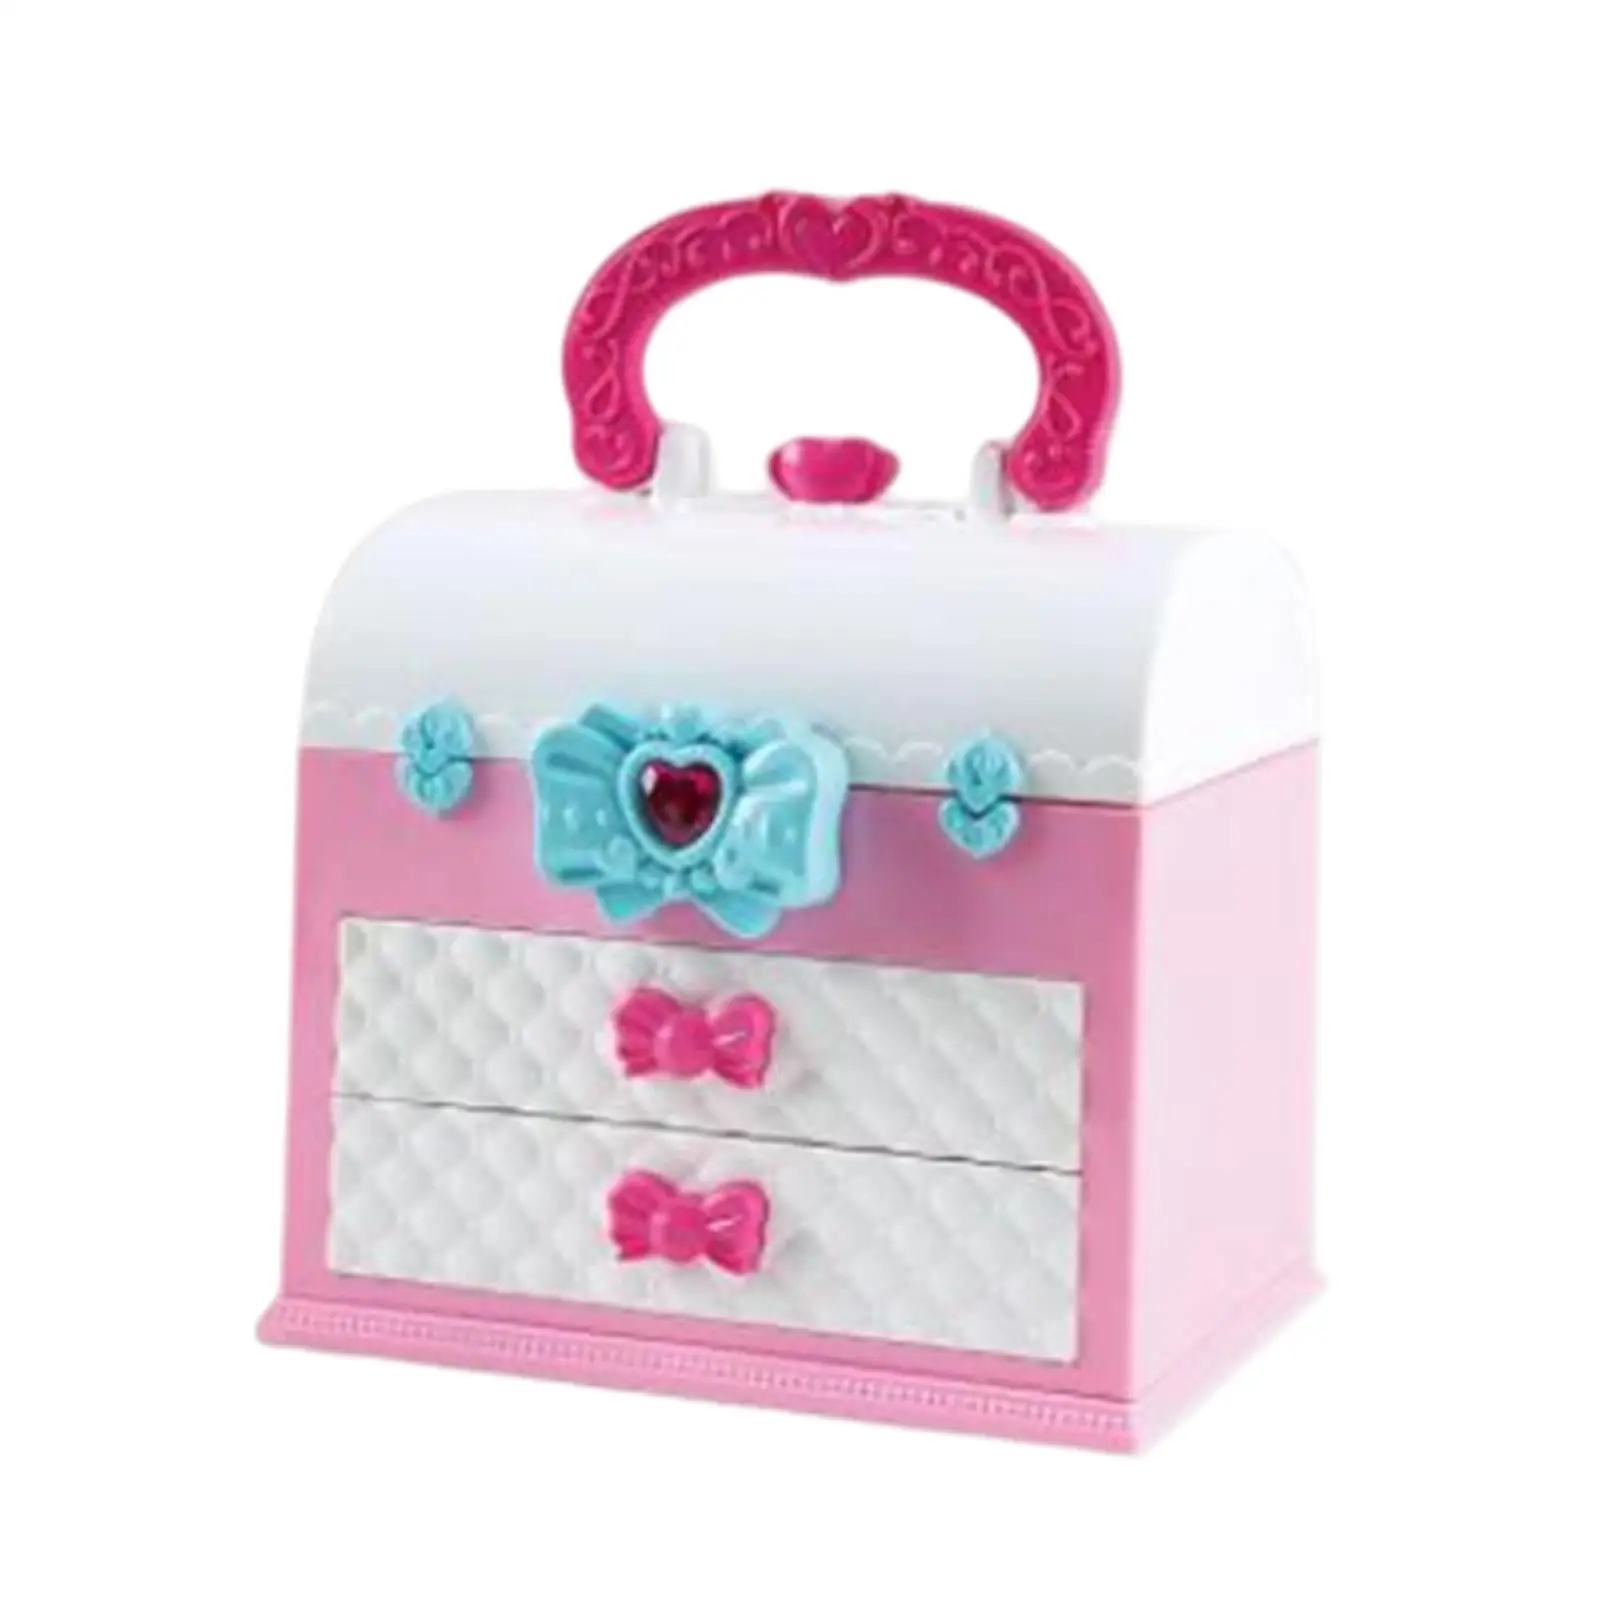 My Makeup Cosmetic Box, Pink/Blush